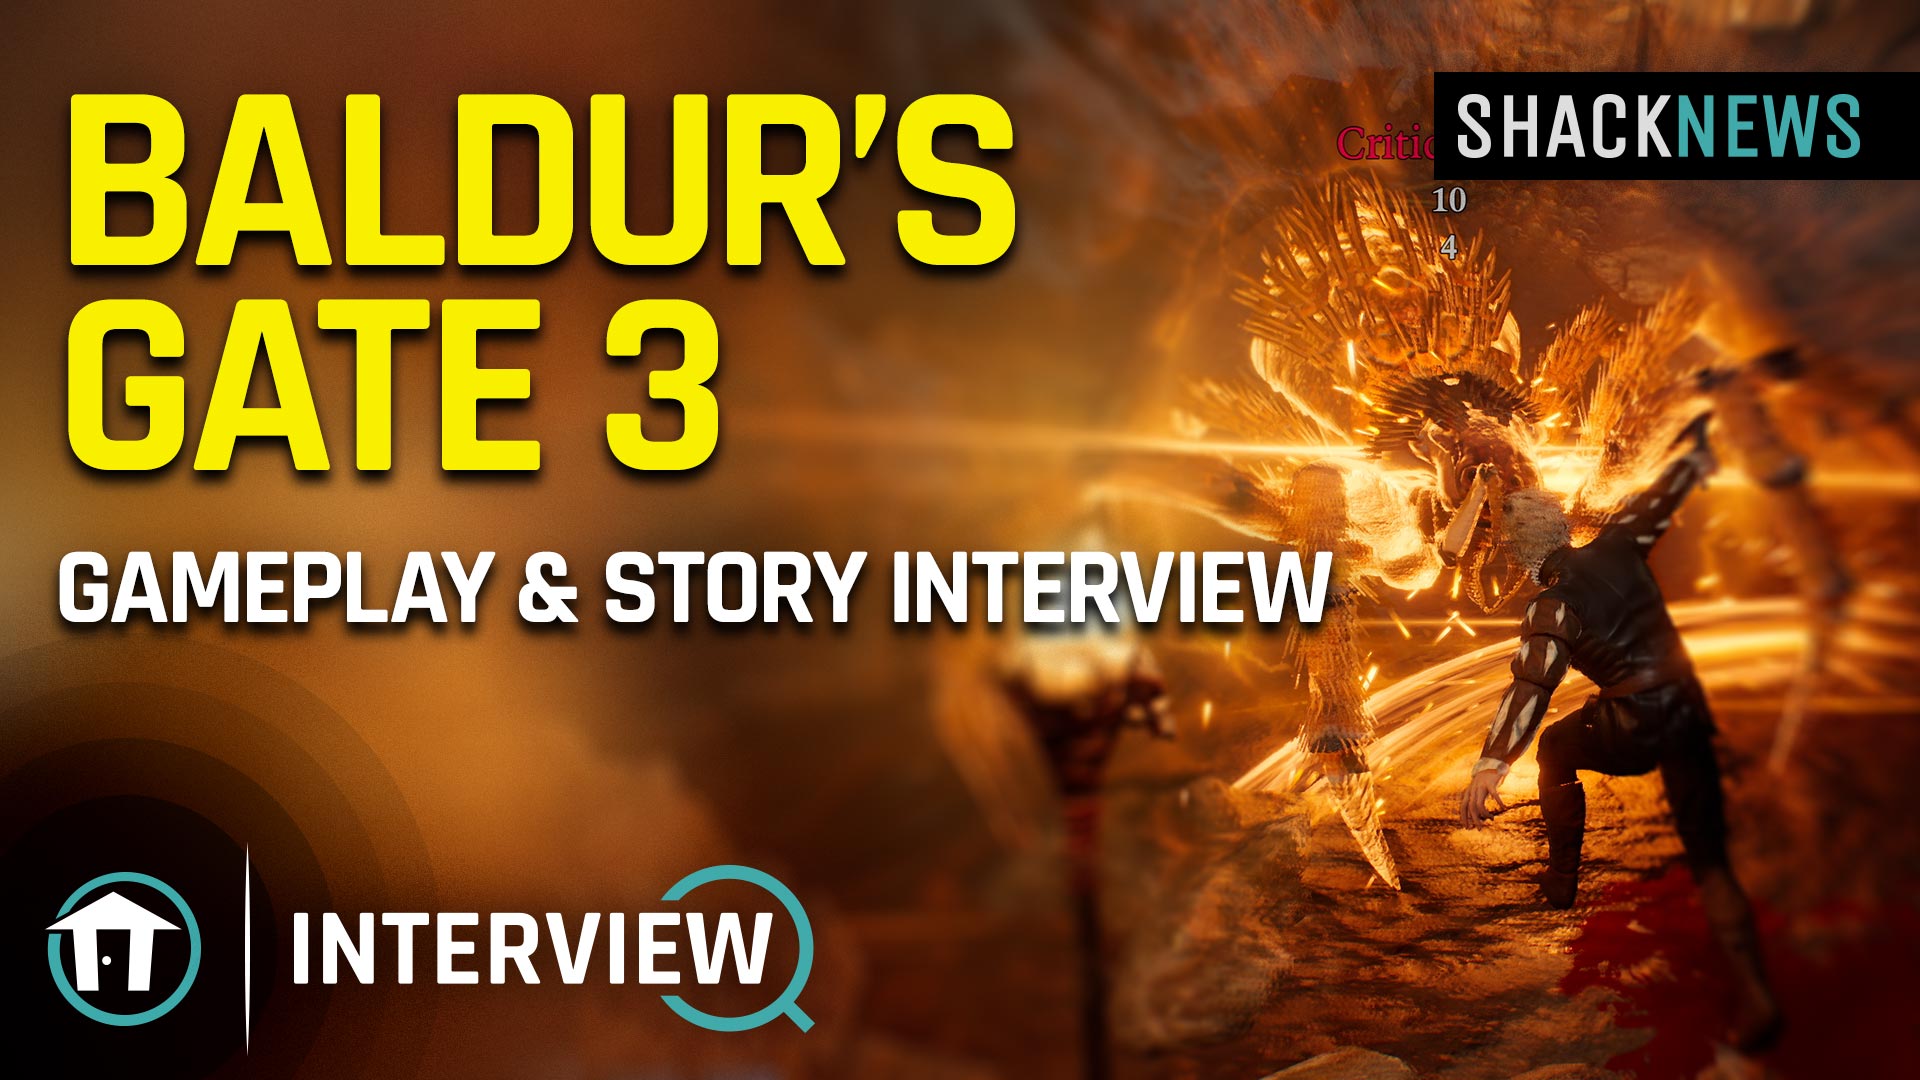 Wawancara Baldur's Gate 3 gameplay & story: "Rule of cool"